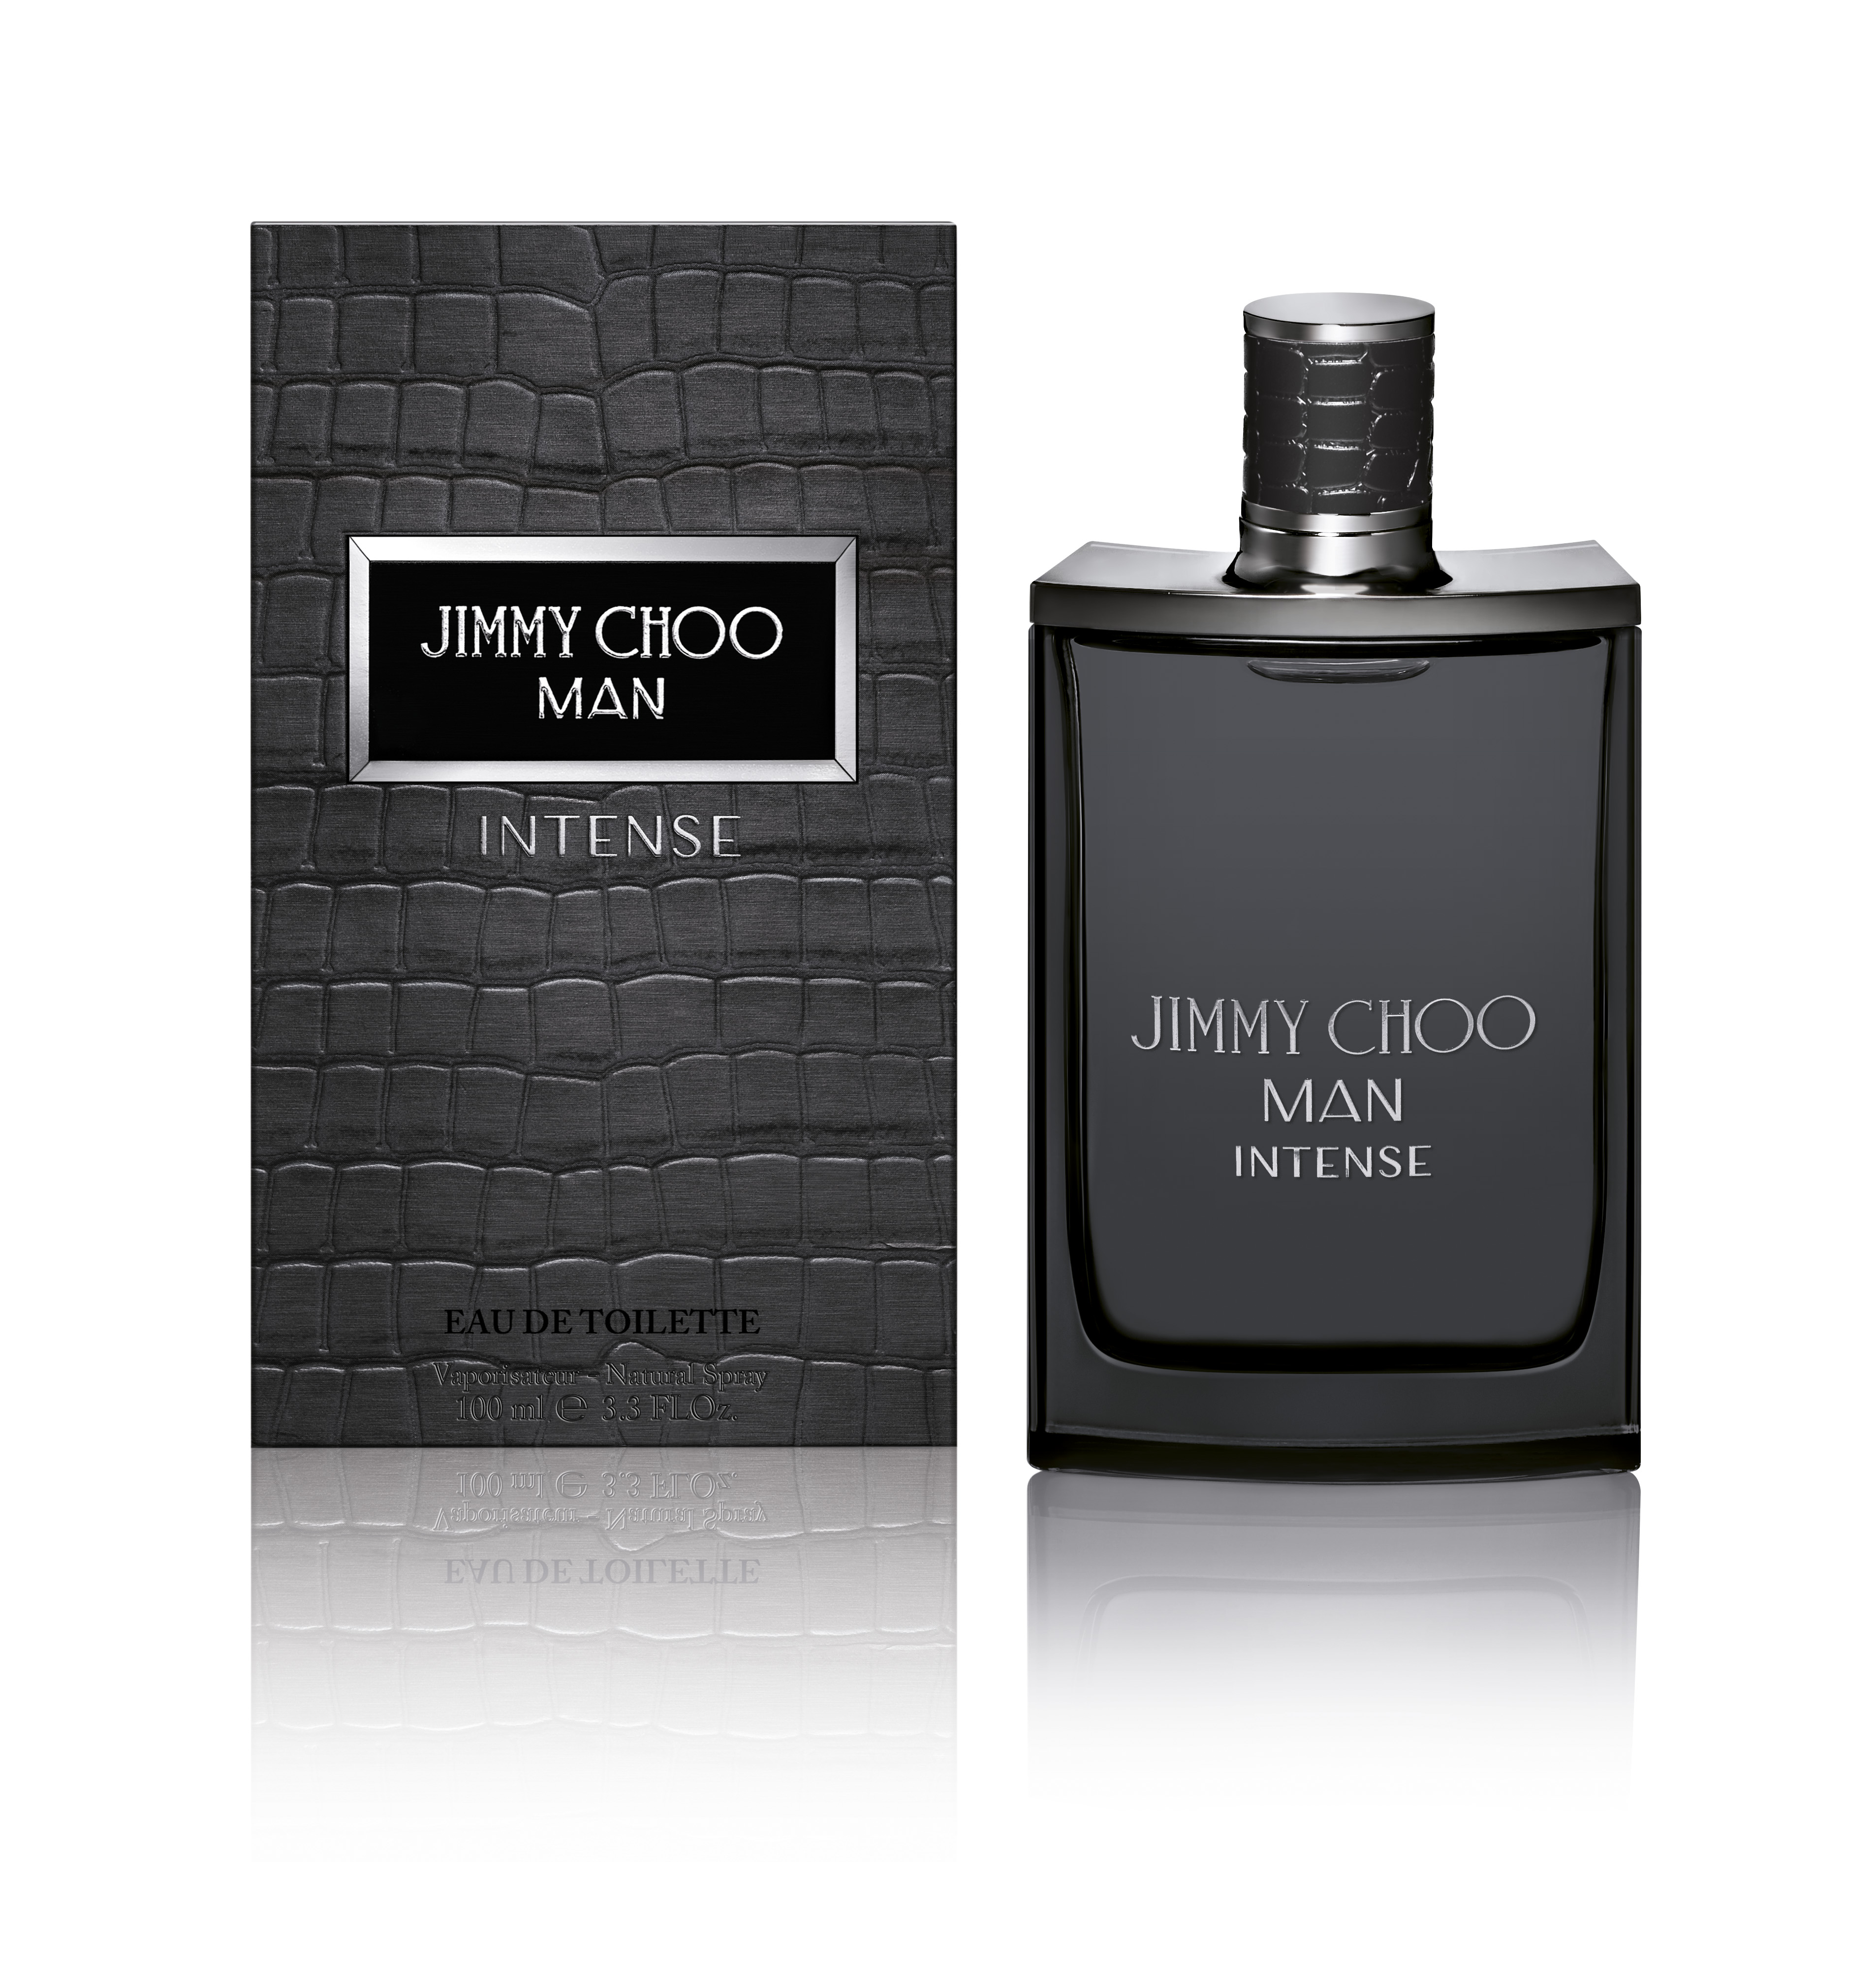 Jimmy Choo profumo: il nuovo Jimmy Choo Man Intense in esclusiva da Sephora